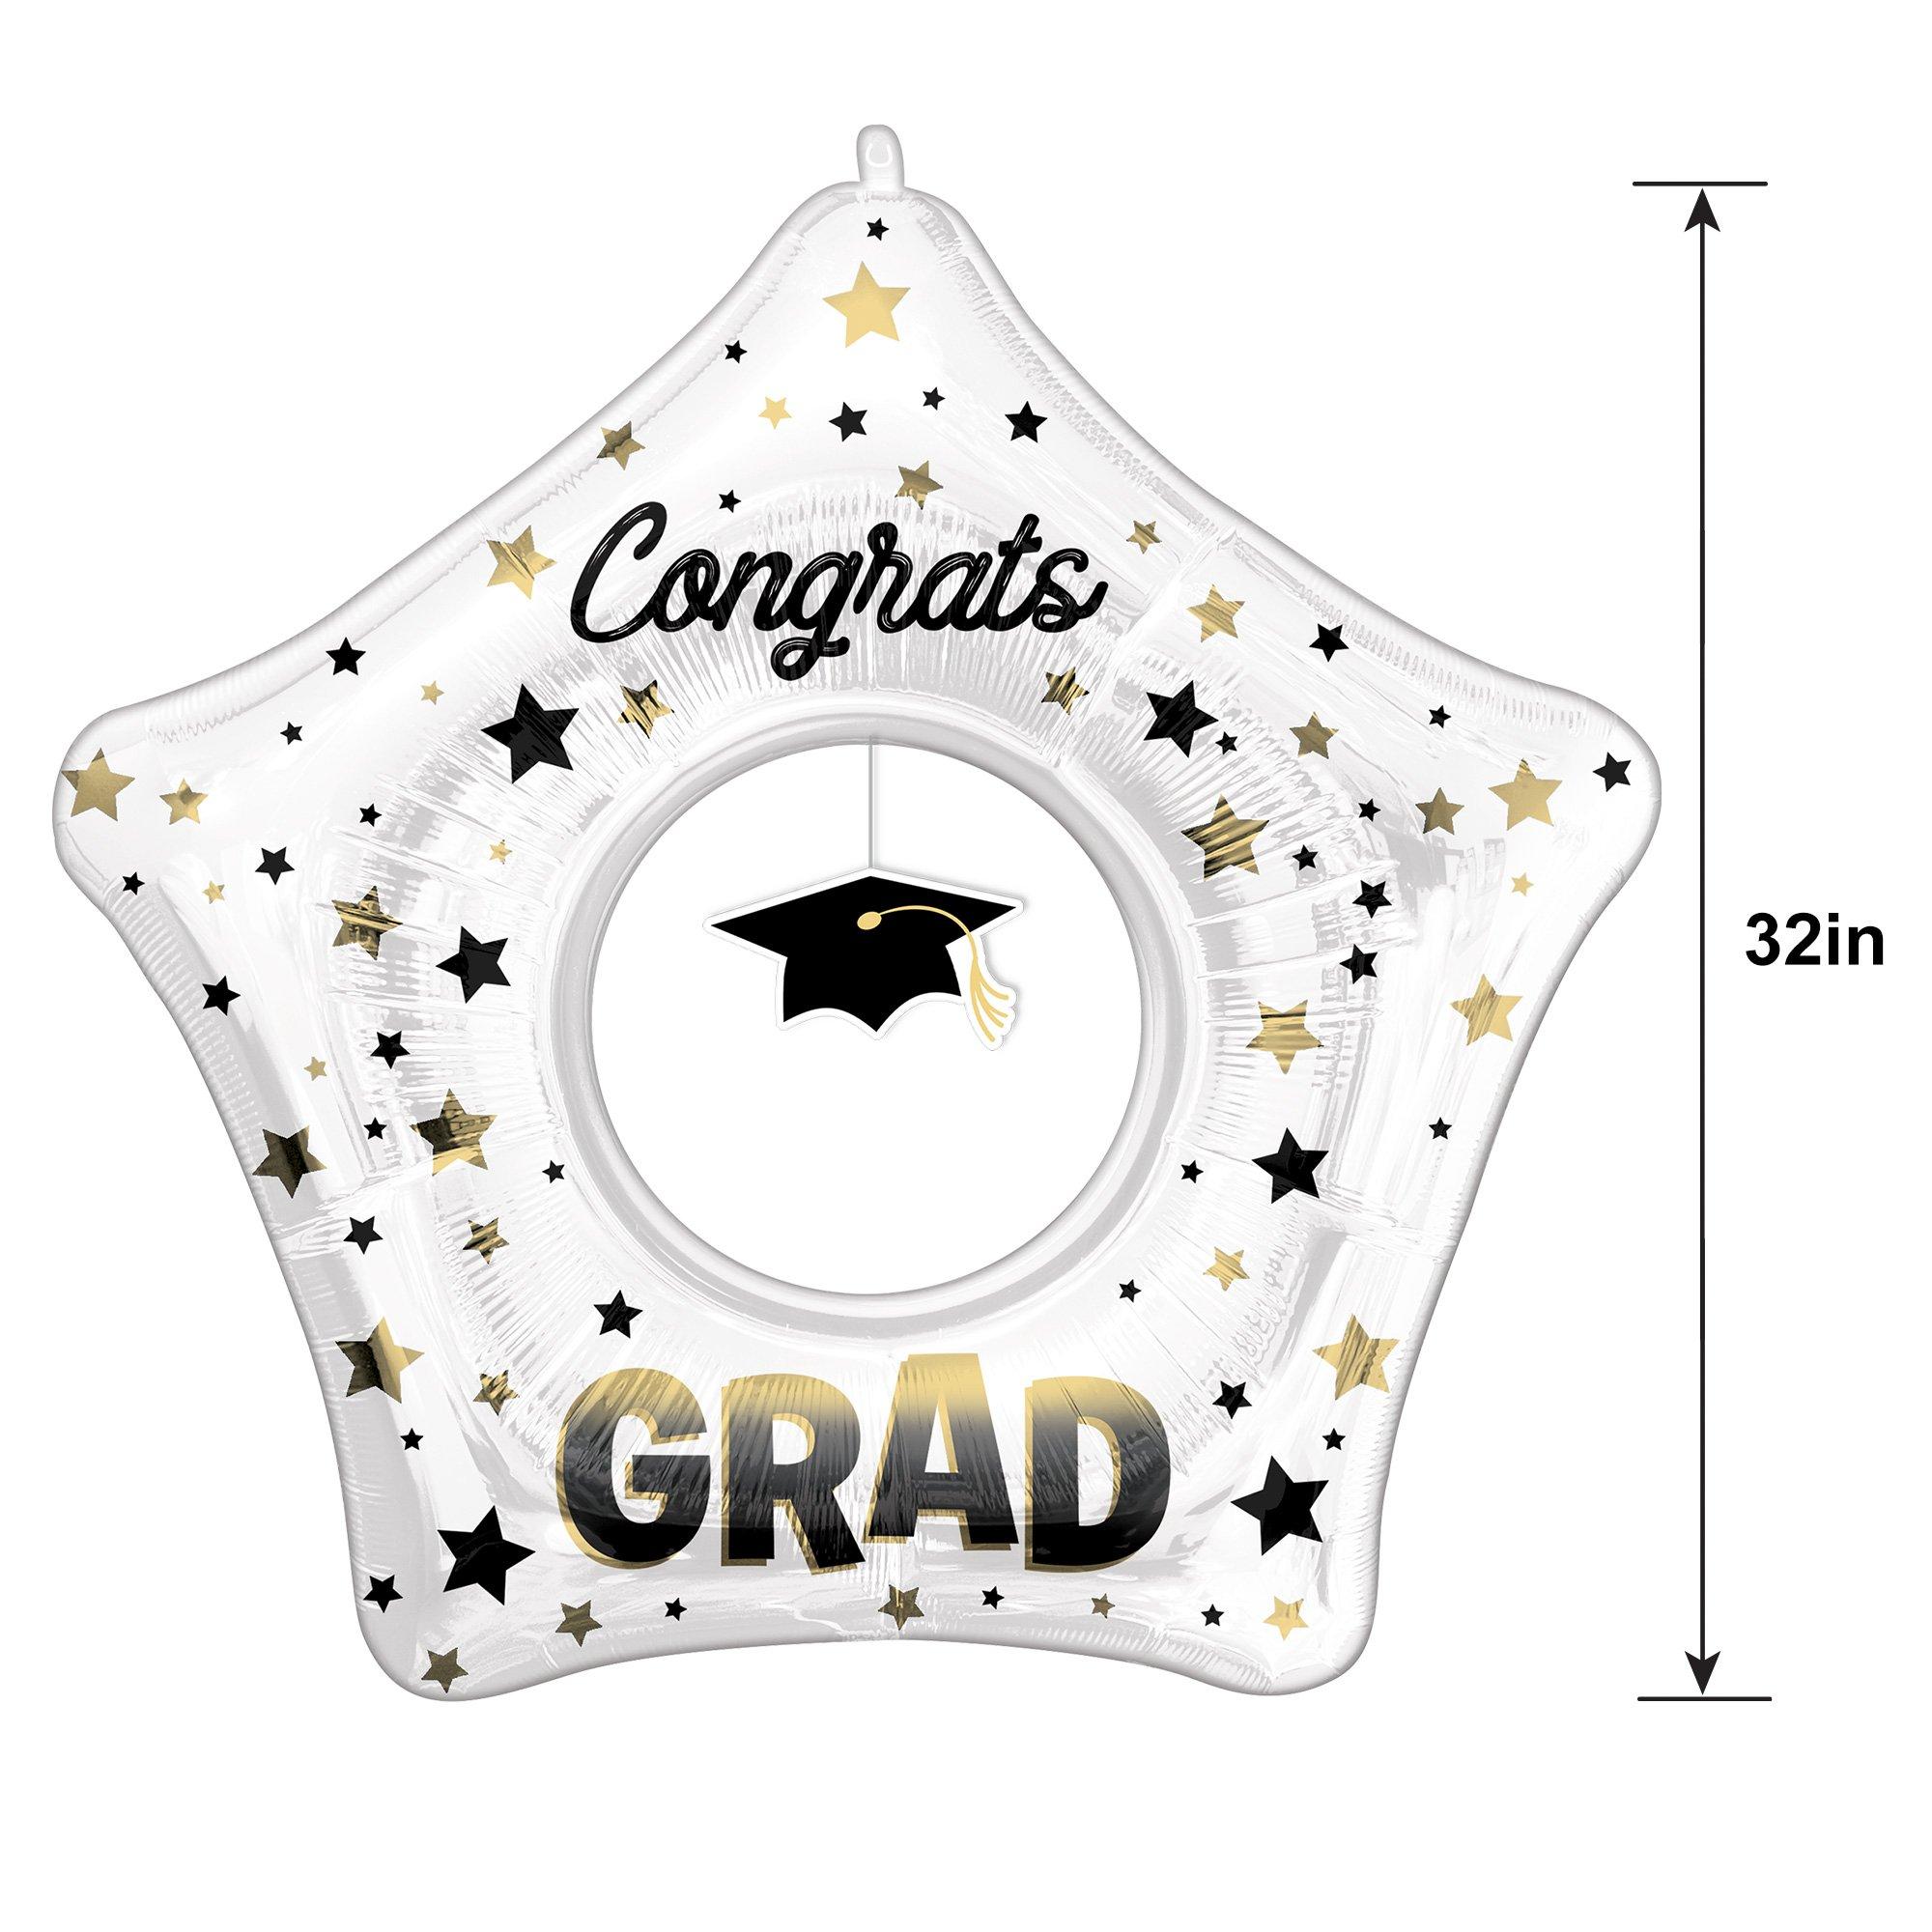 Congrats Grad Cap Dangler Star Foil Balloon, 32in - Diffused Gold Ombre